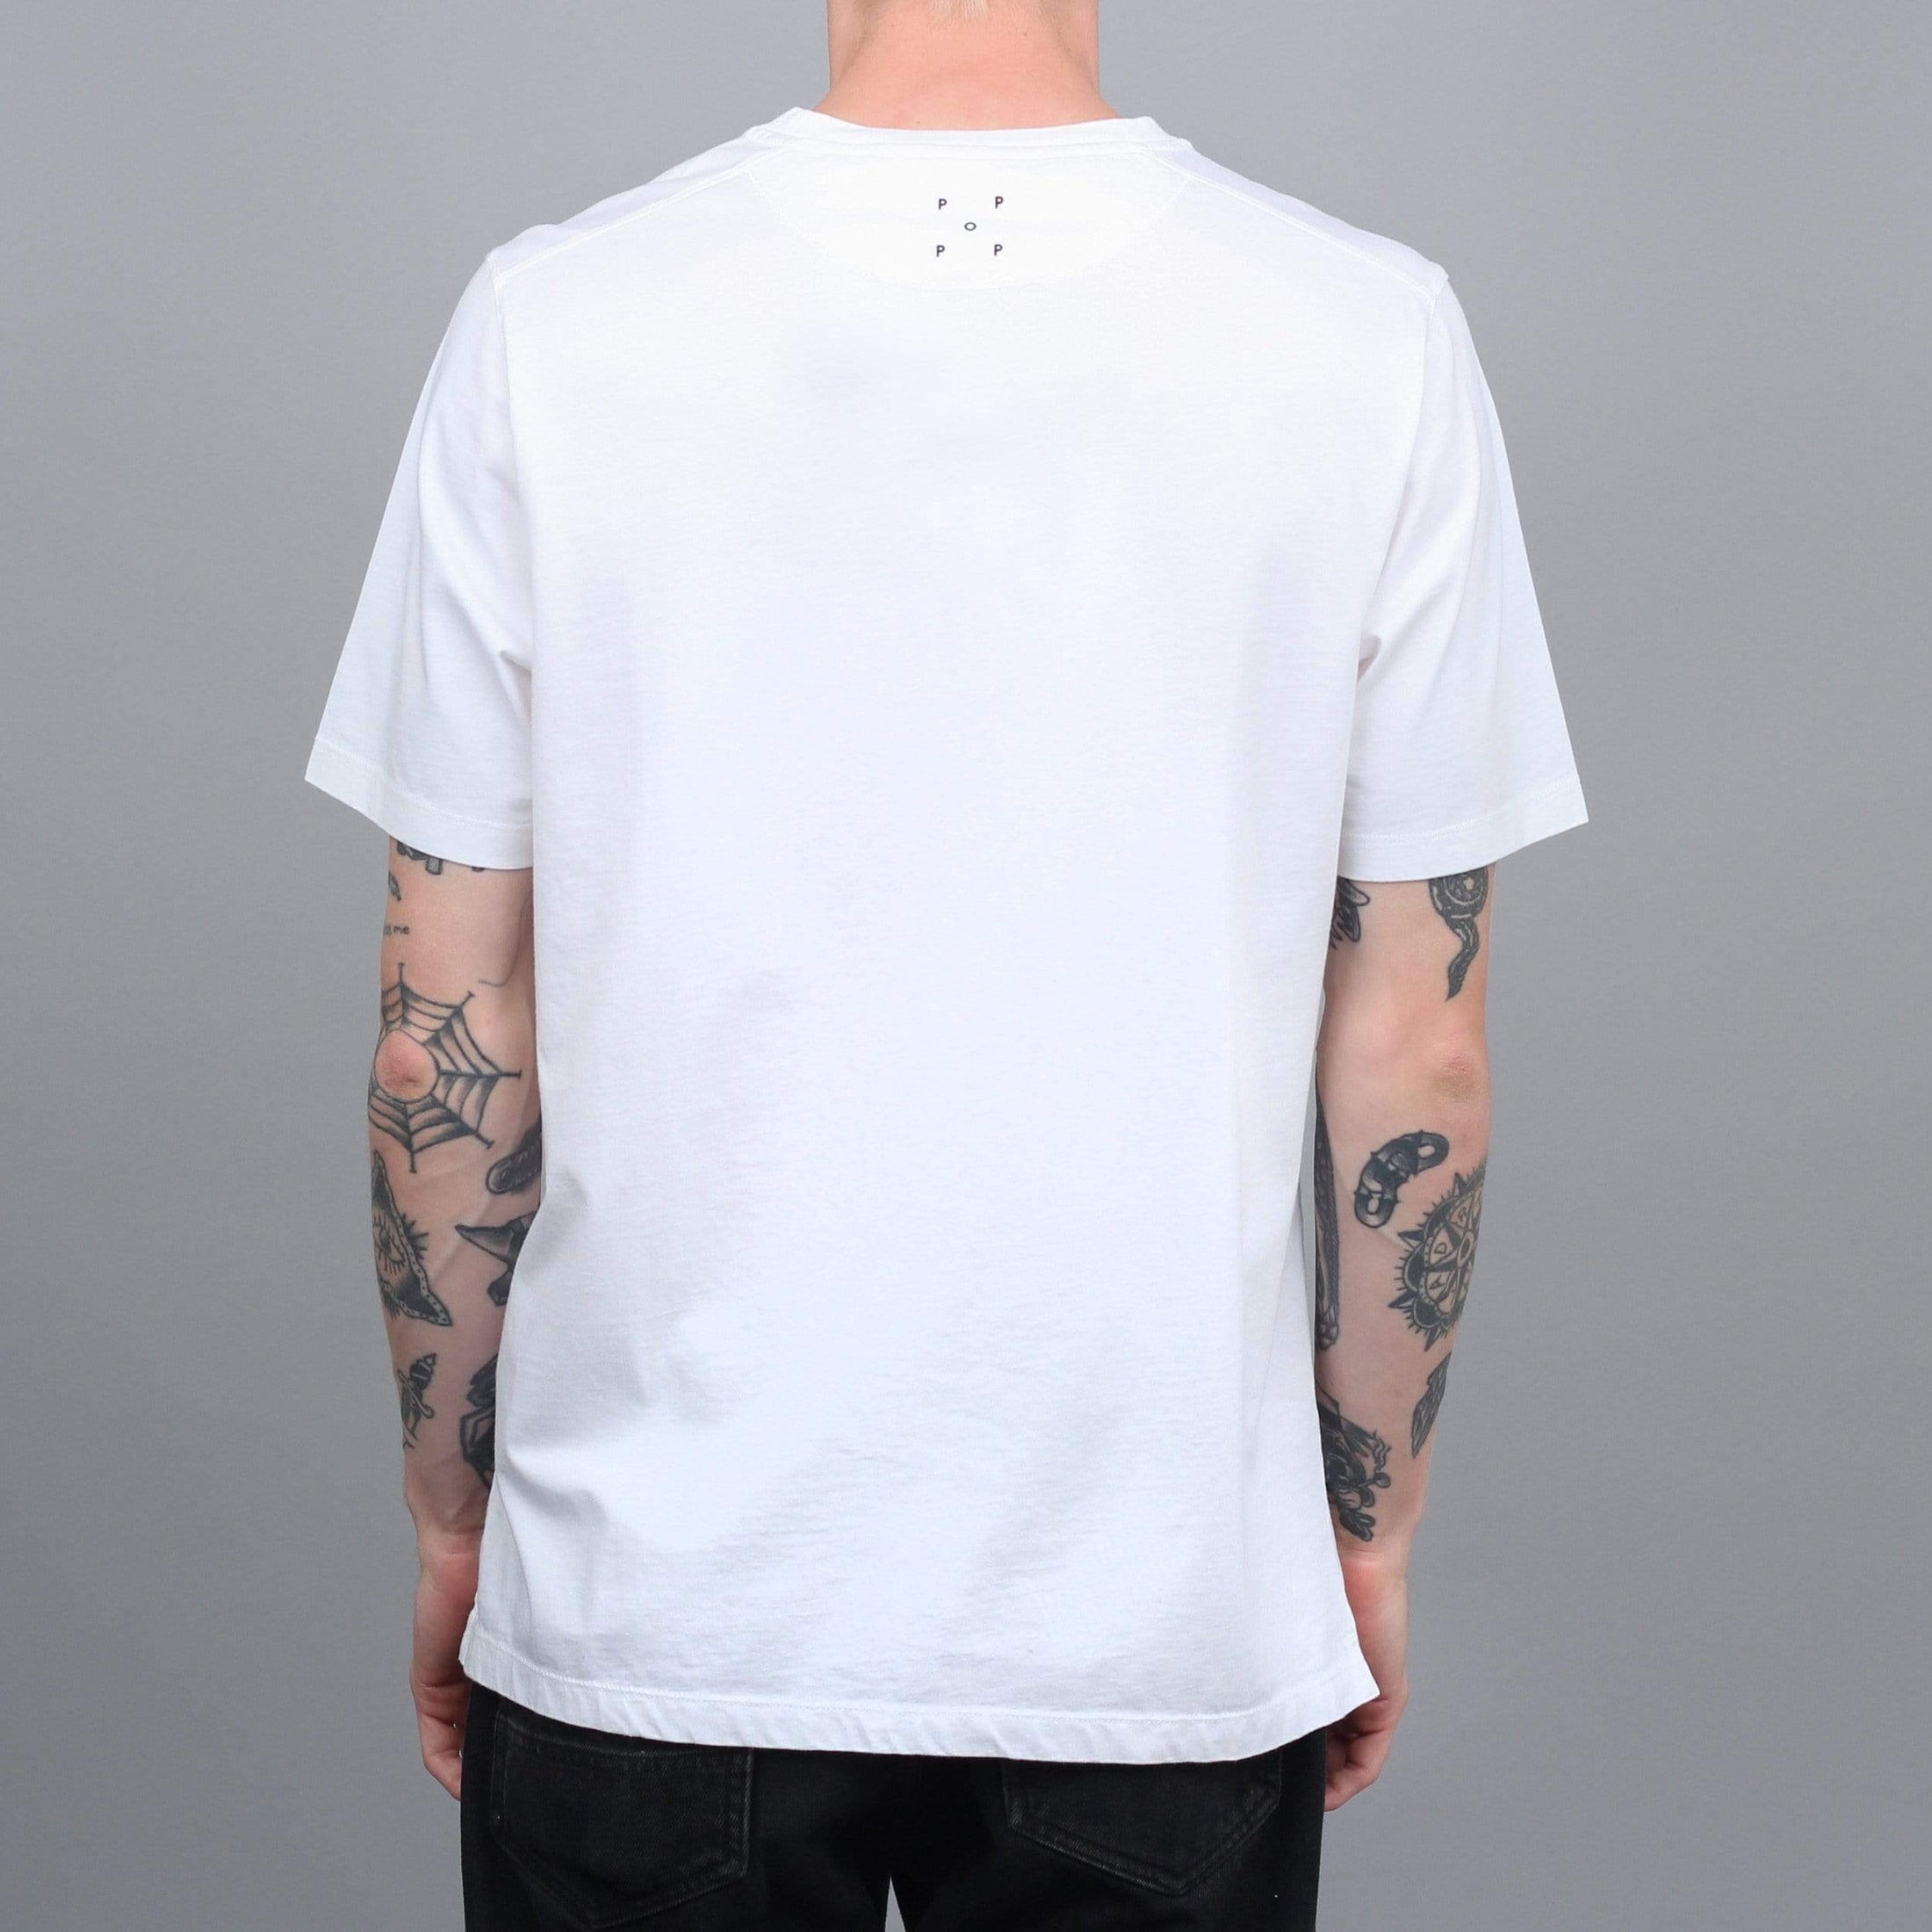 Pop Trading Pop Eye T-Shirt White